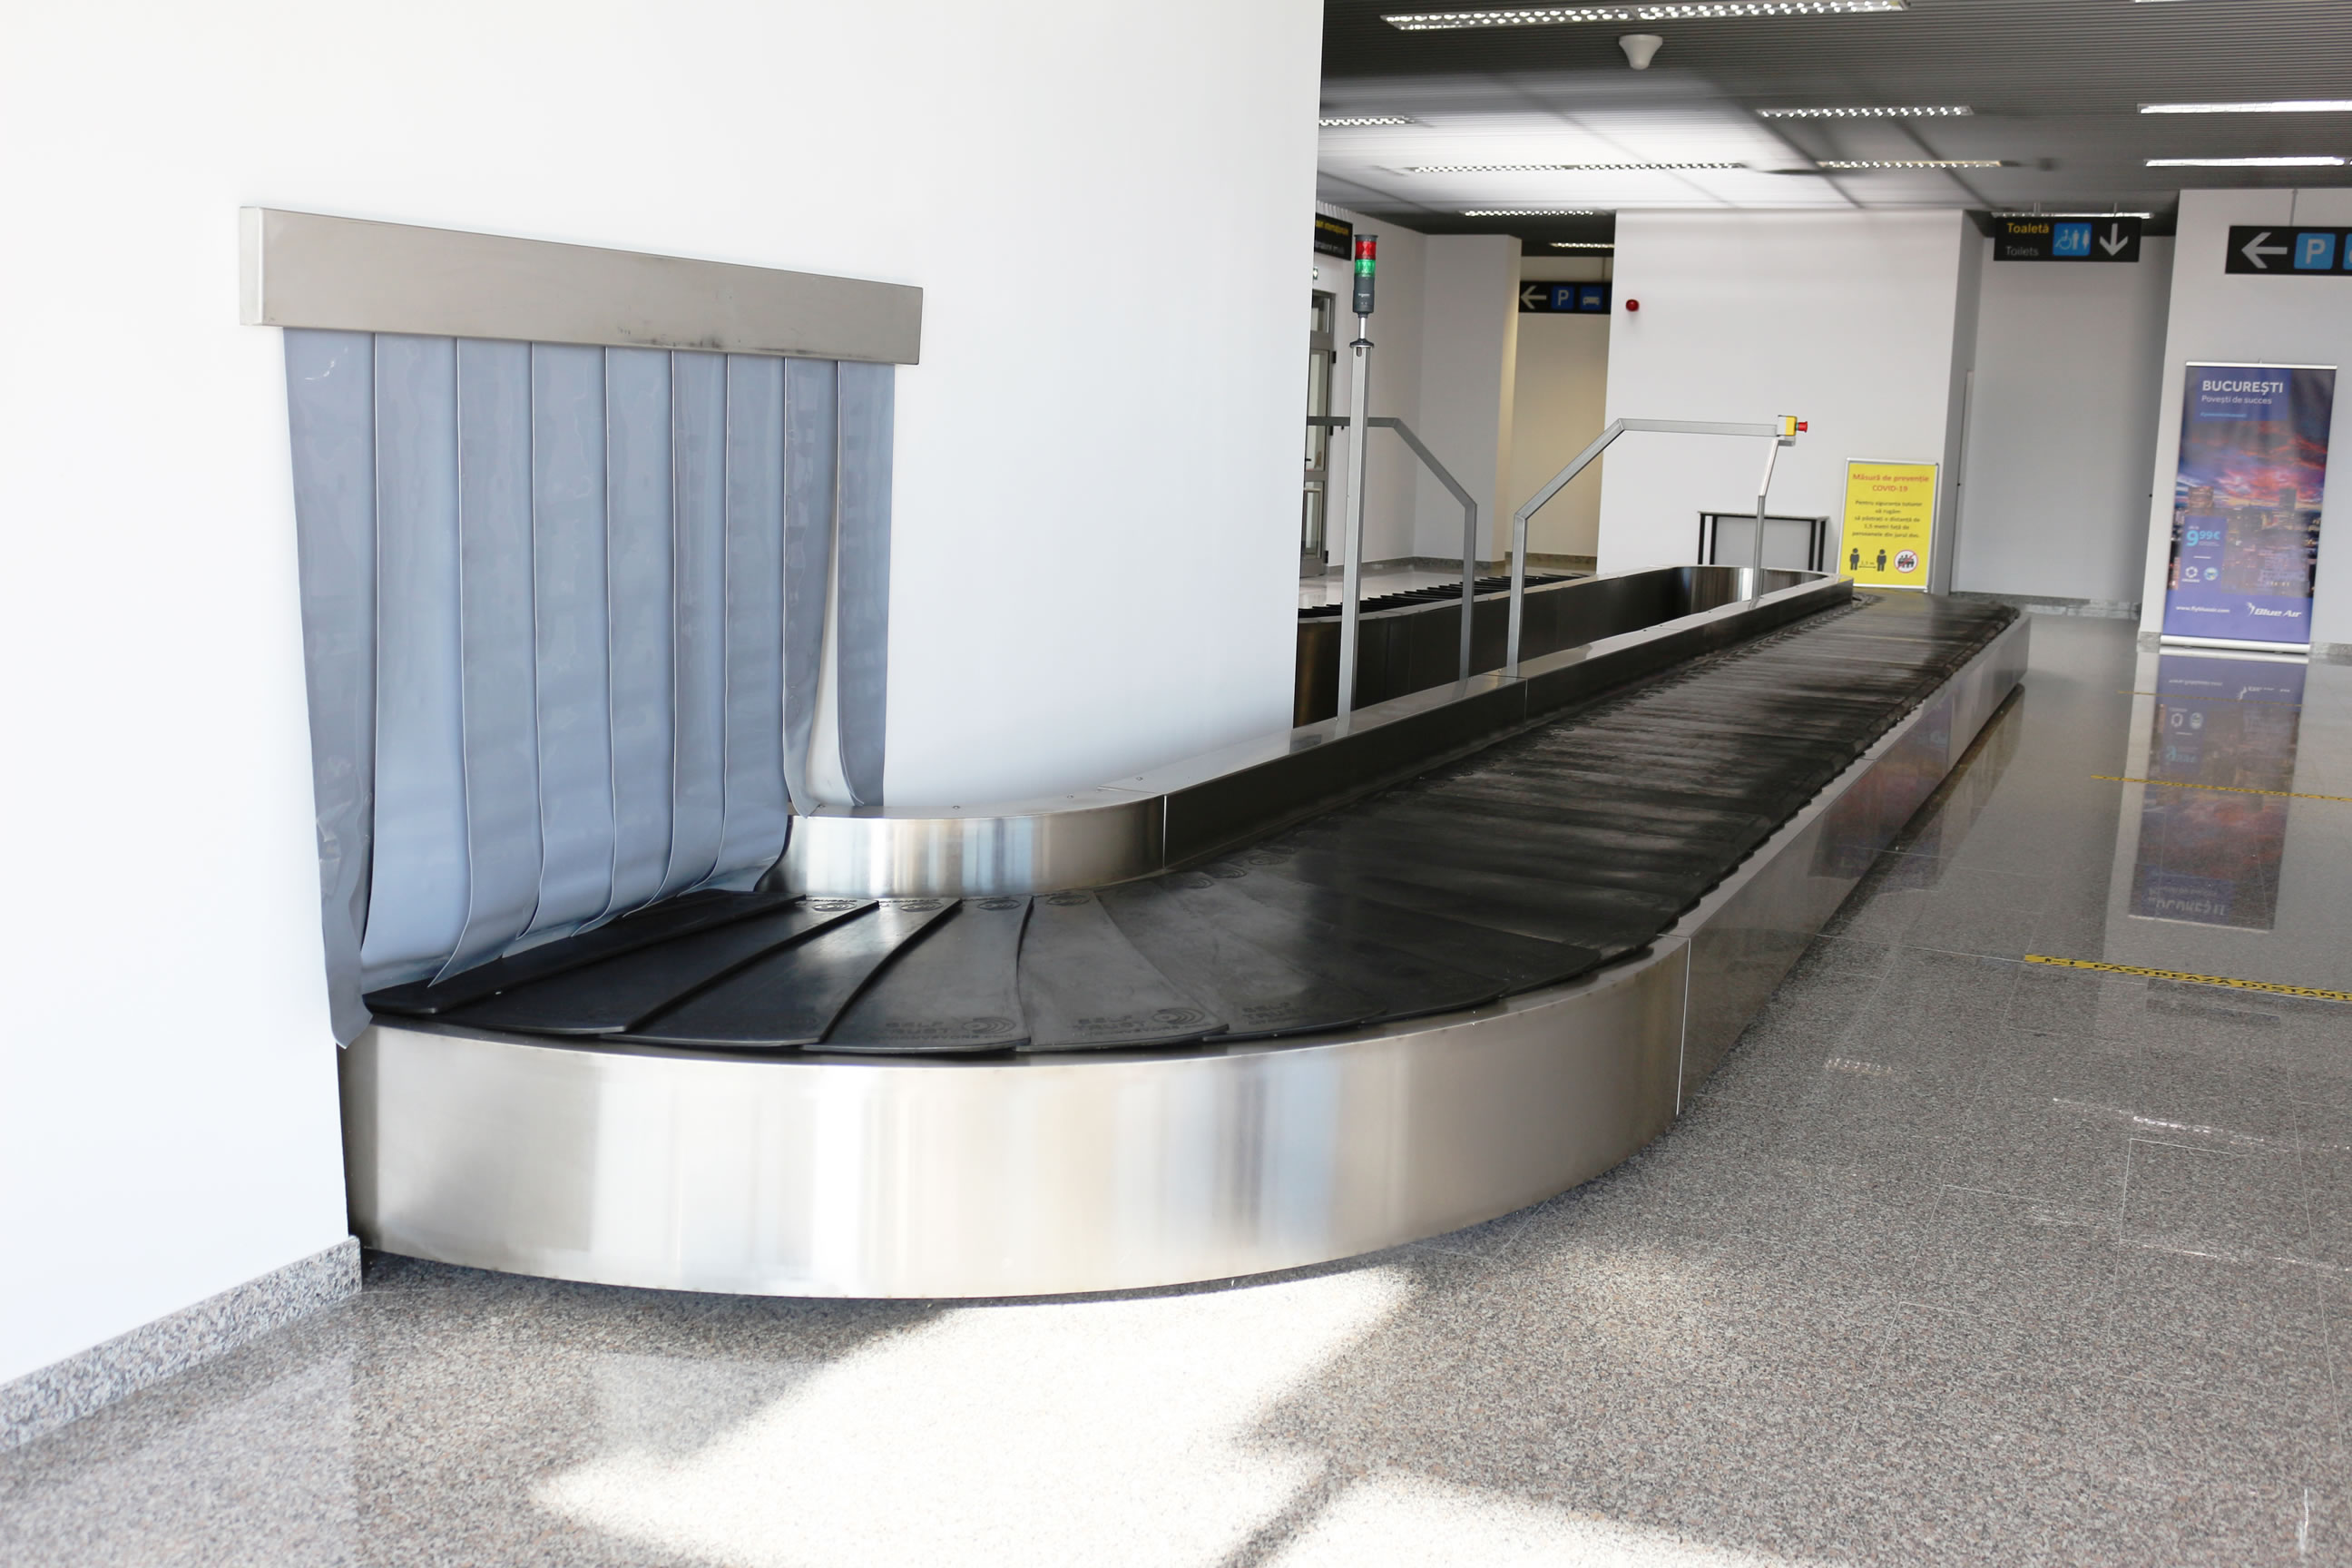 baggage-reclaim-carousel-airport-suppliers